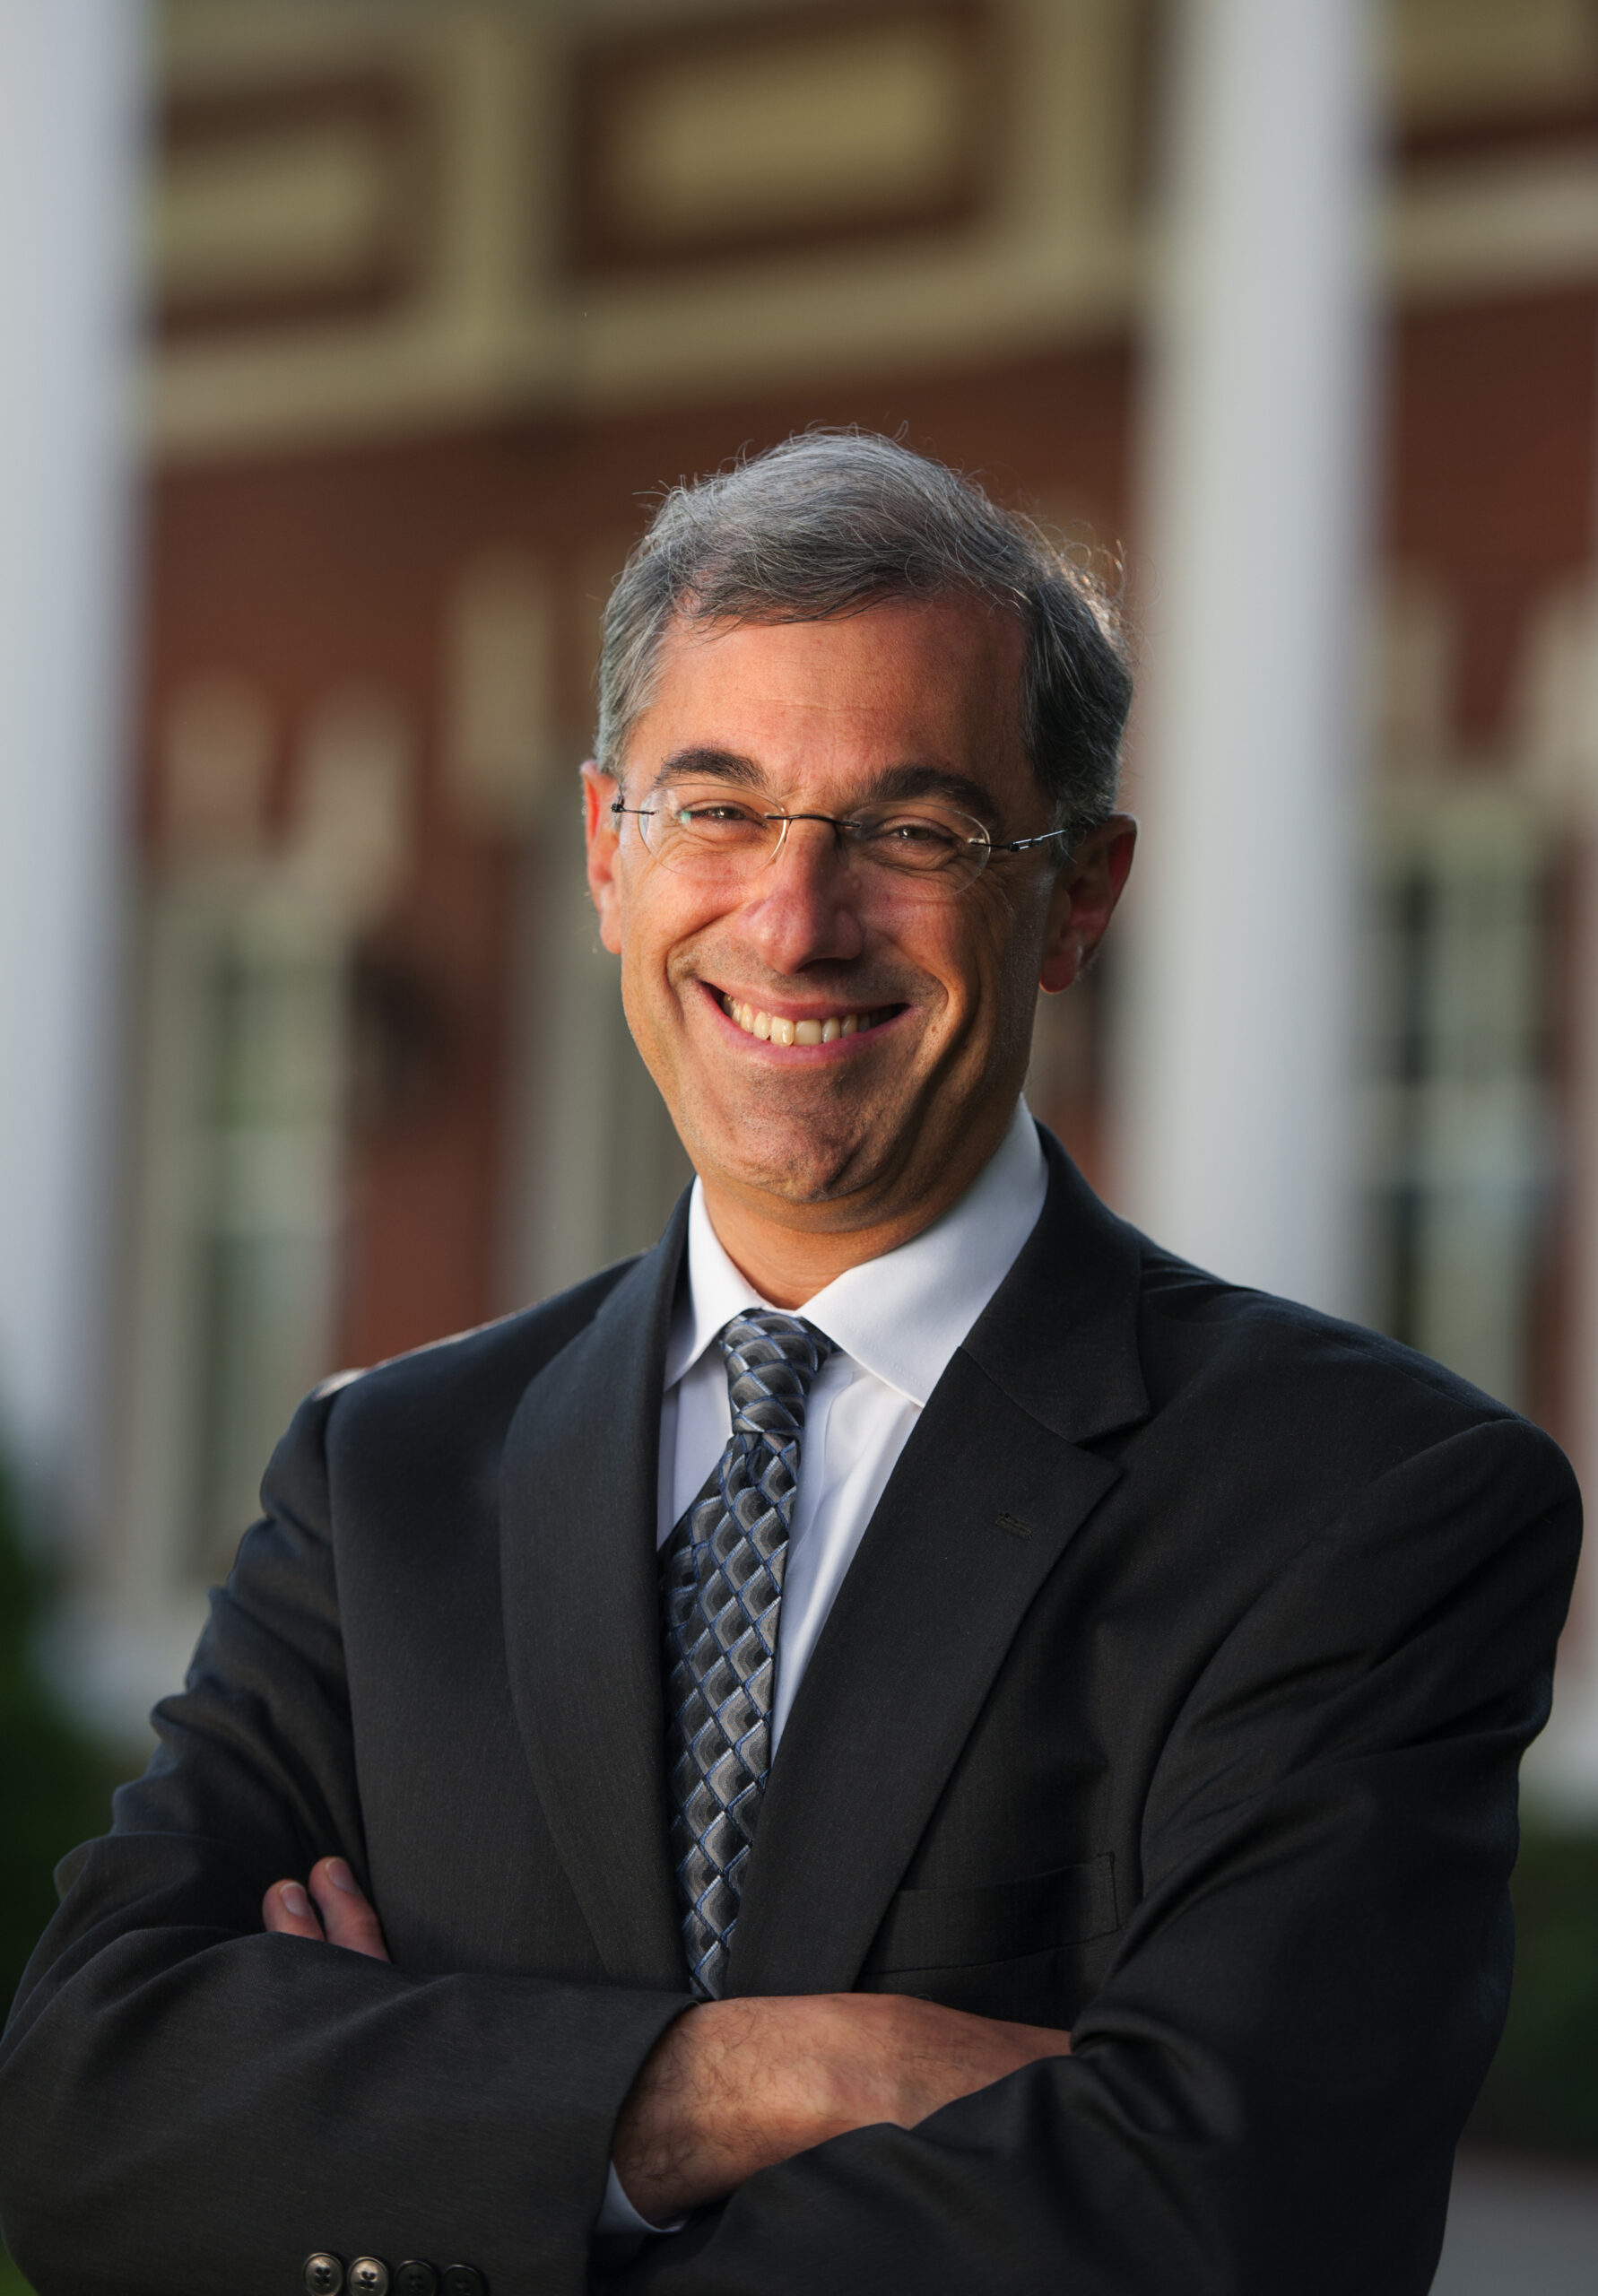 Francesco C. Cesareo is president of Assumption College in Massachusetts.